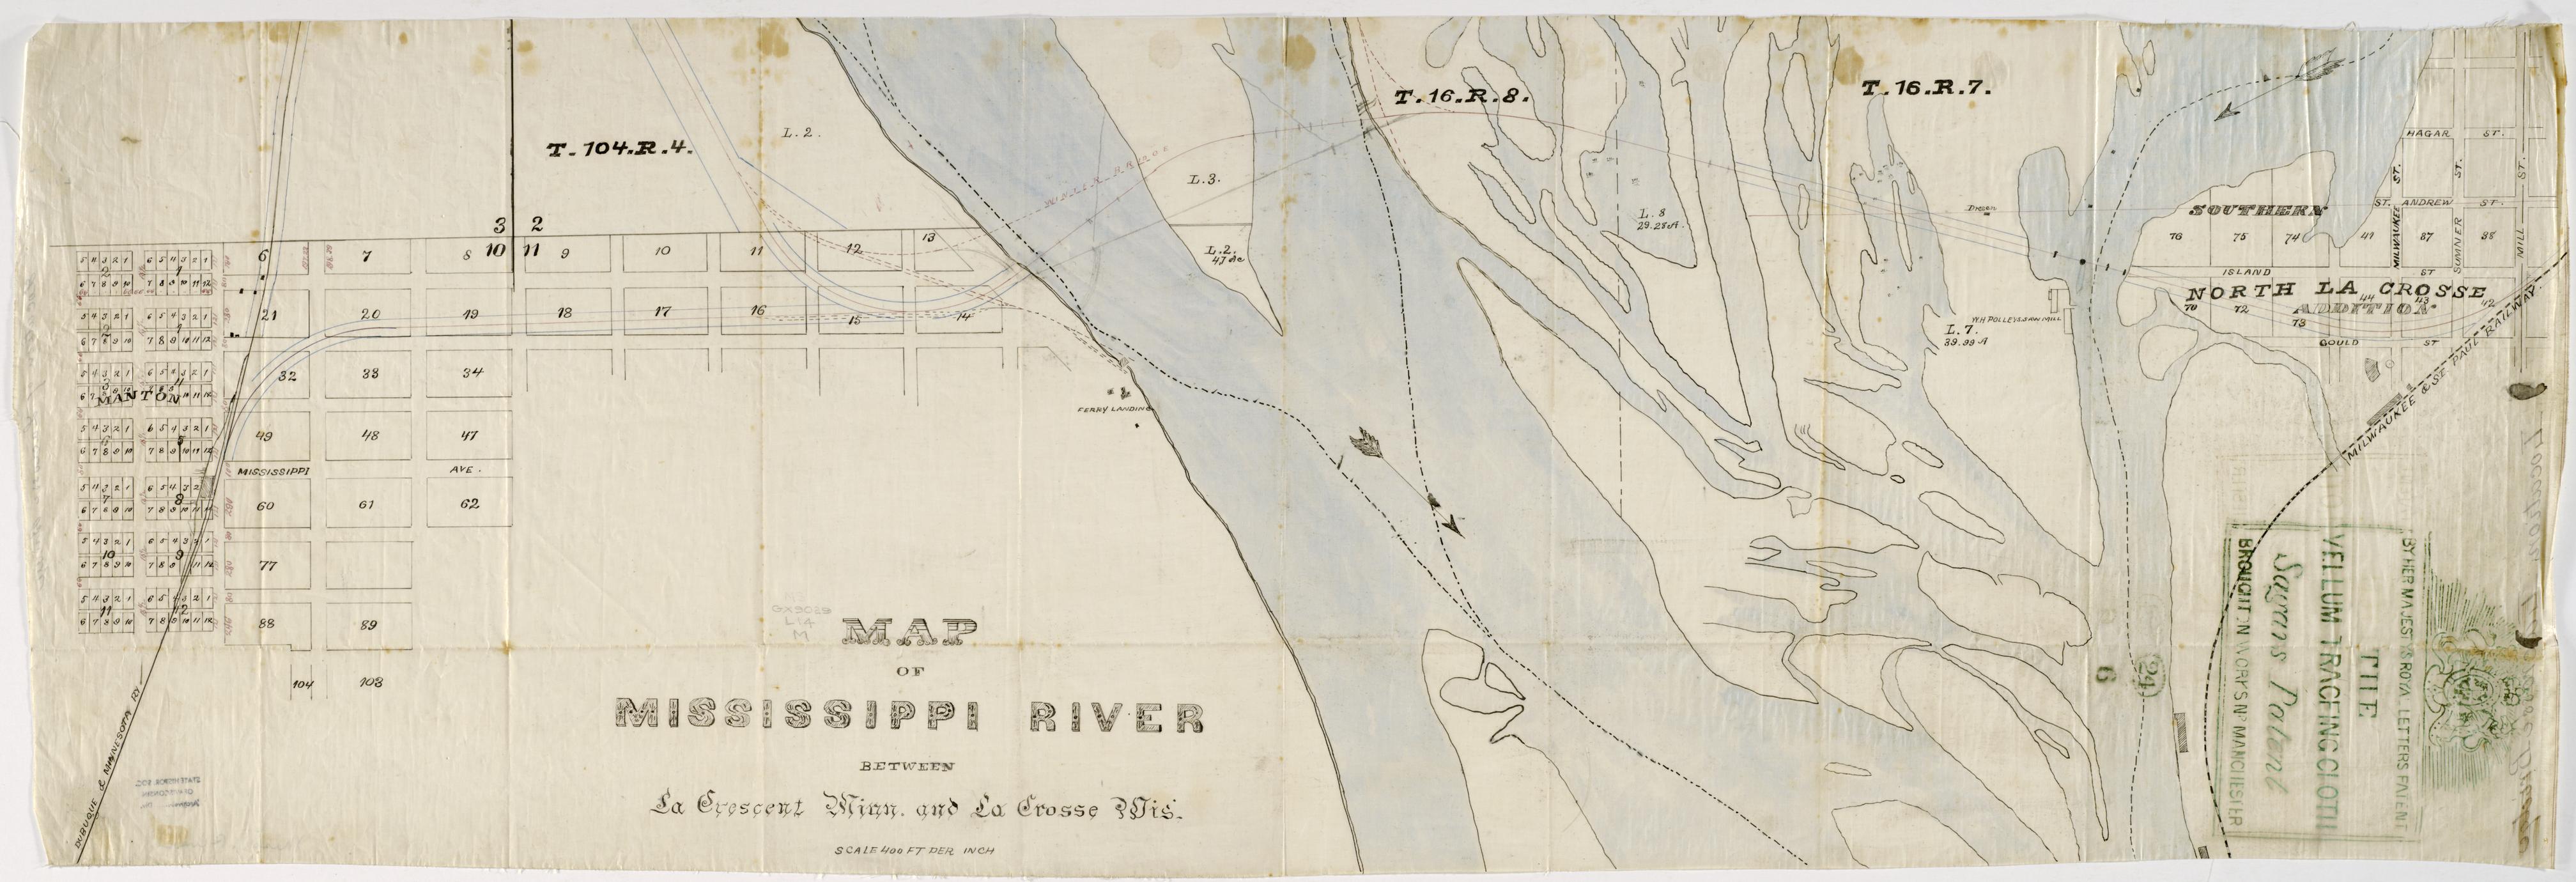 Map of Mississippi River between La Crescent, Minnesota and La Crosse, Wisconsin